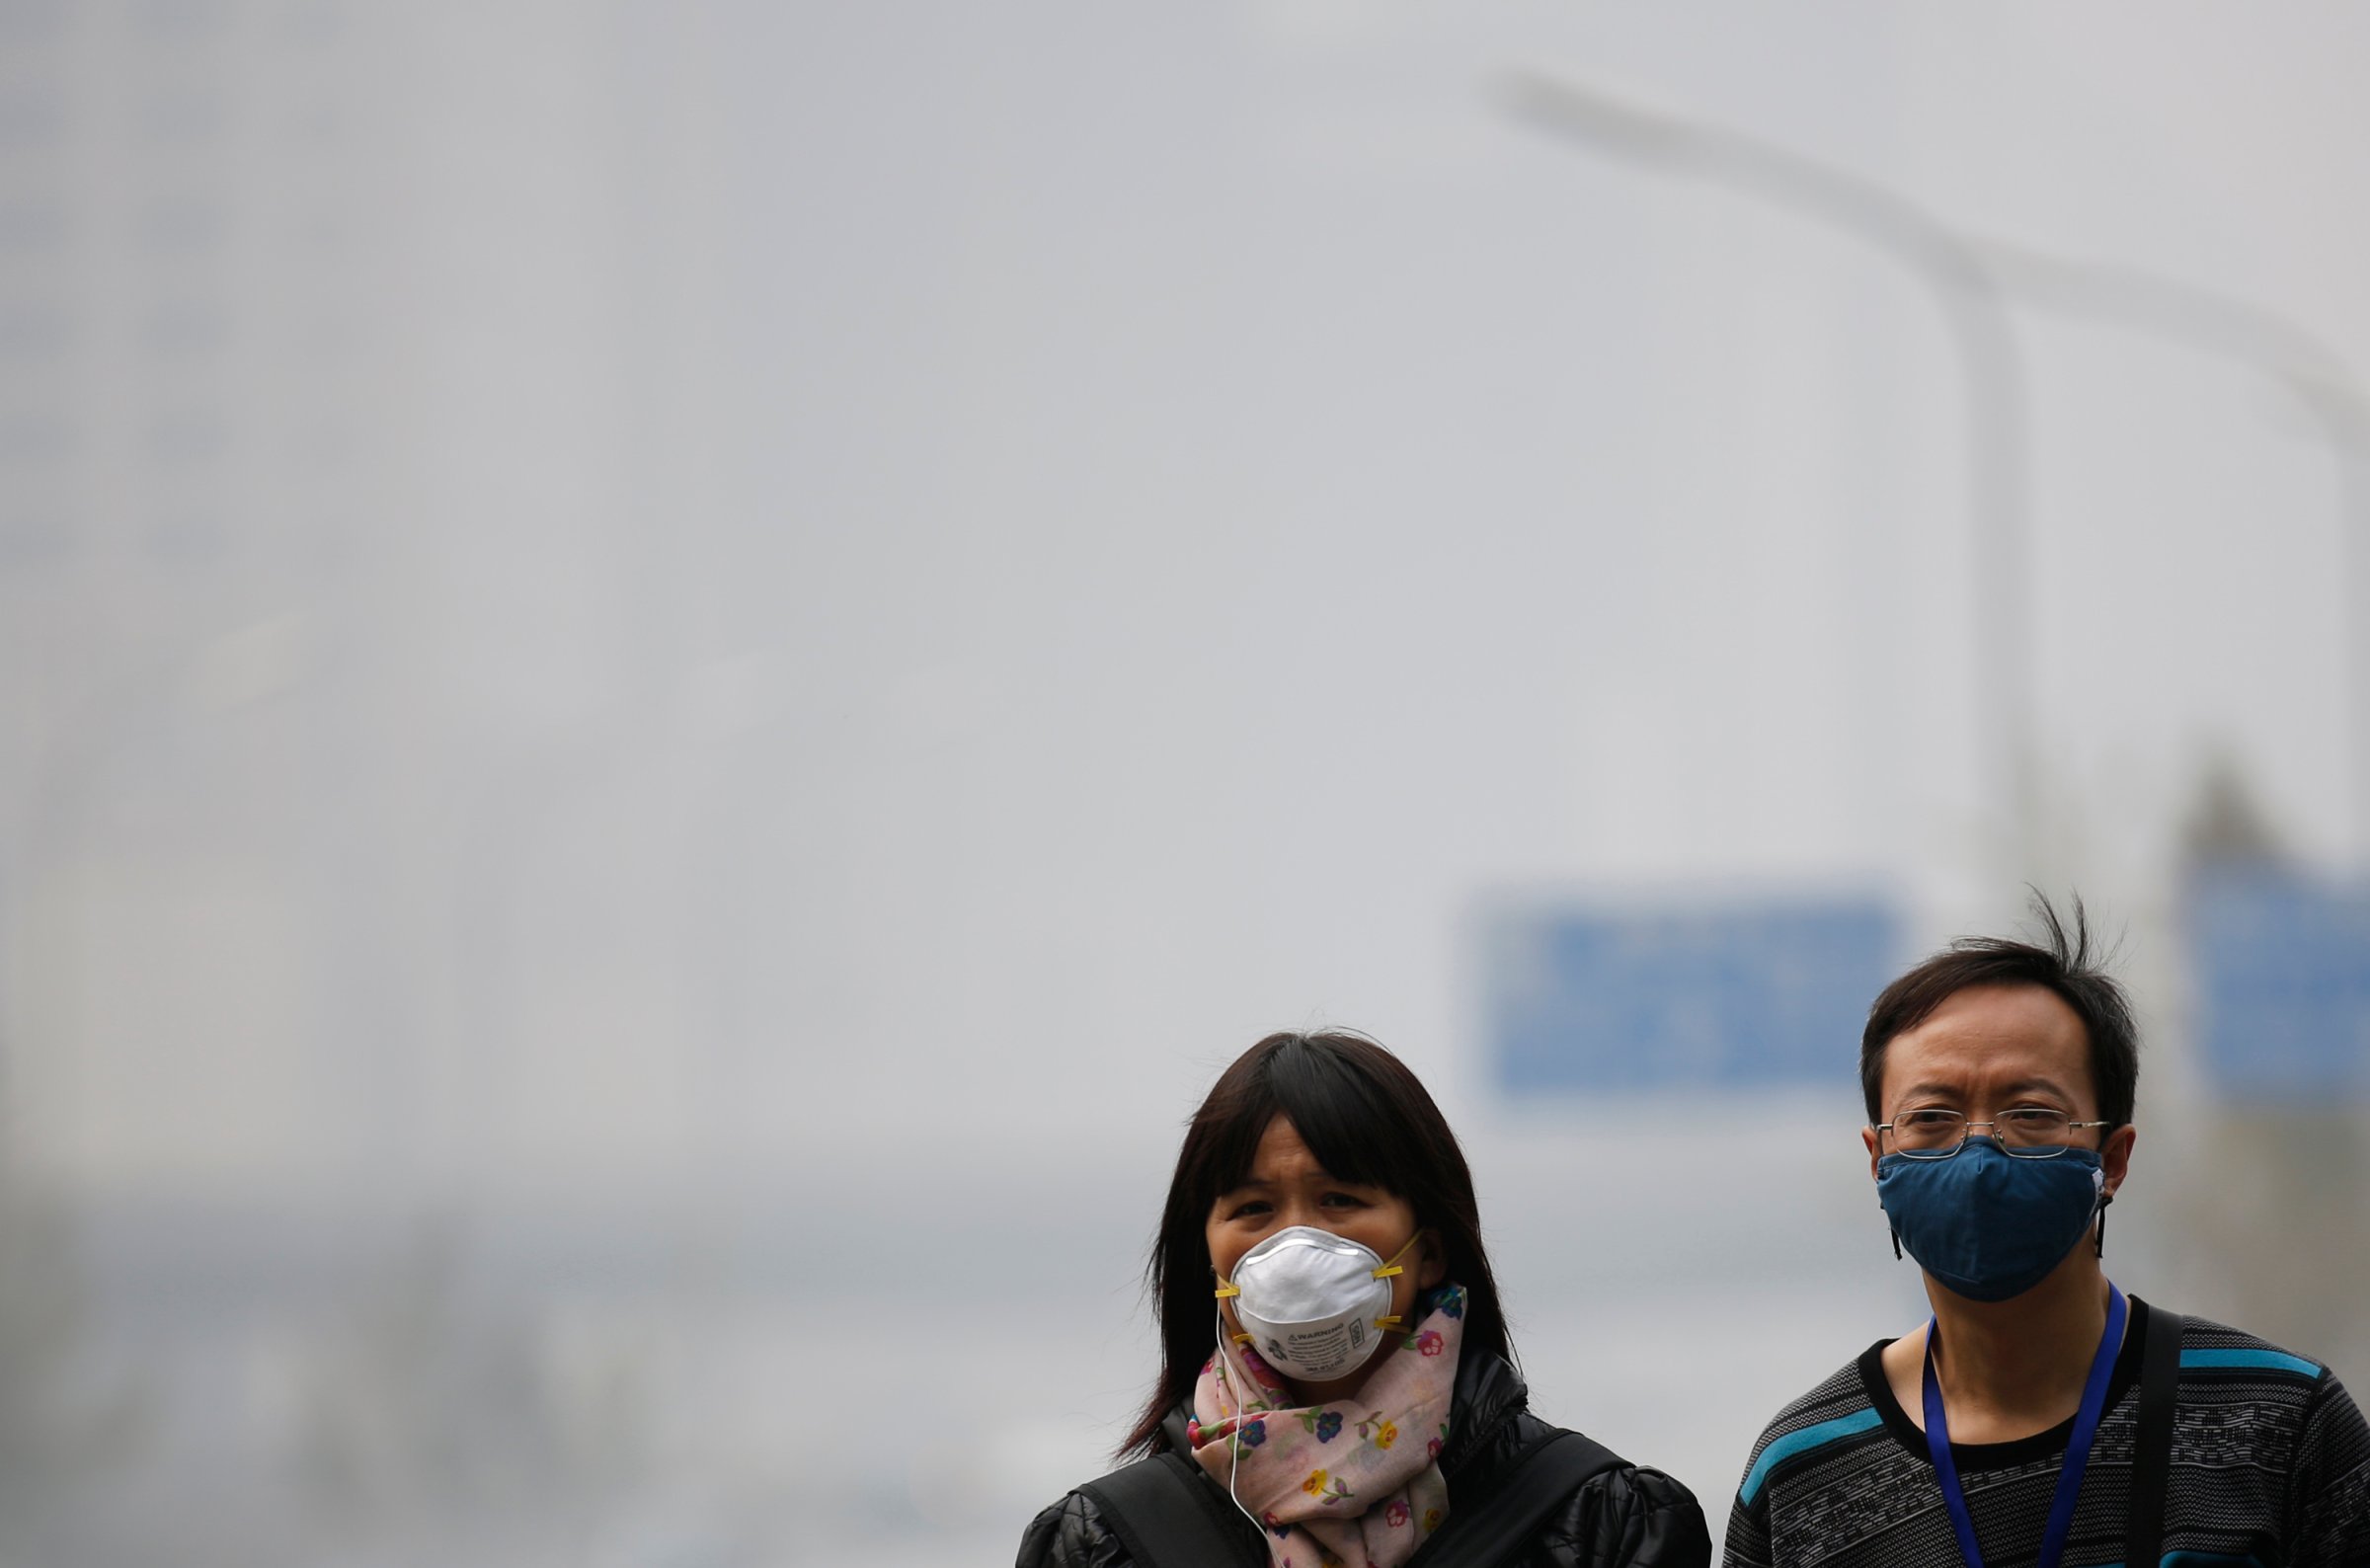 People wearing masks walk on a street amid heavy haze and smog in Beijing